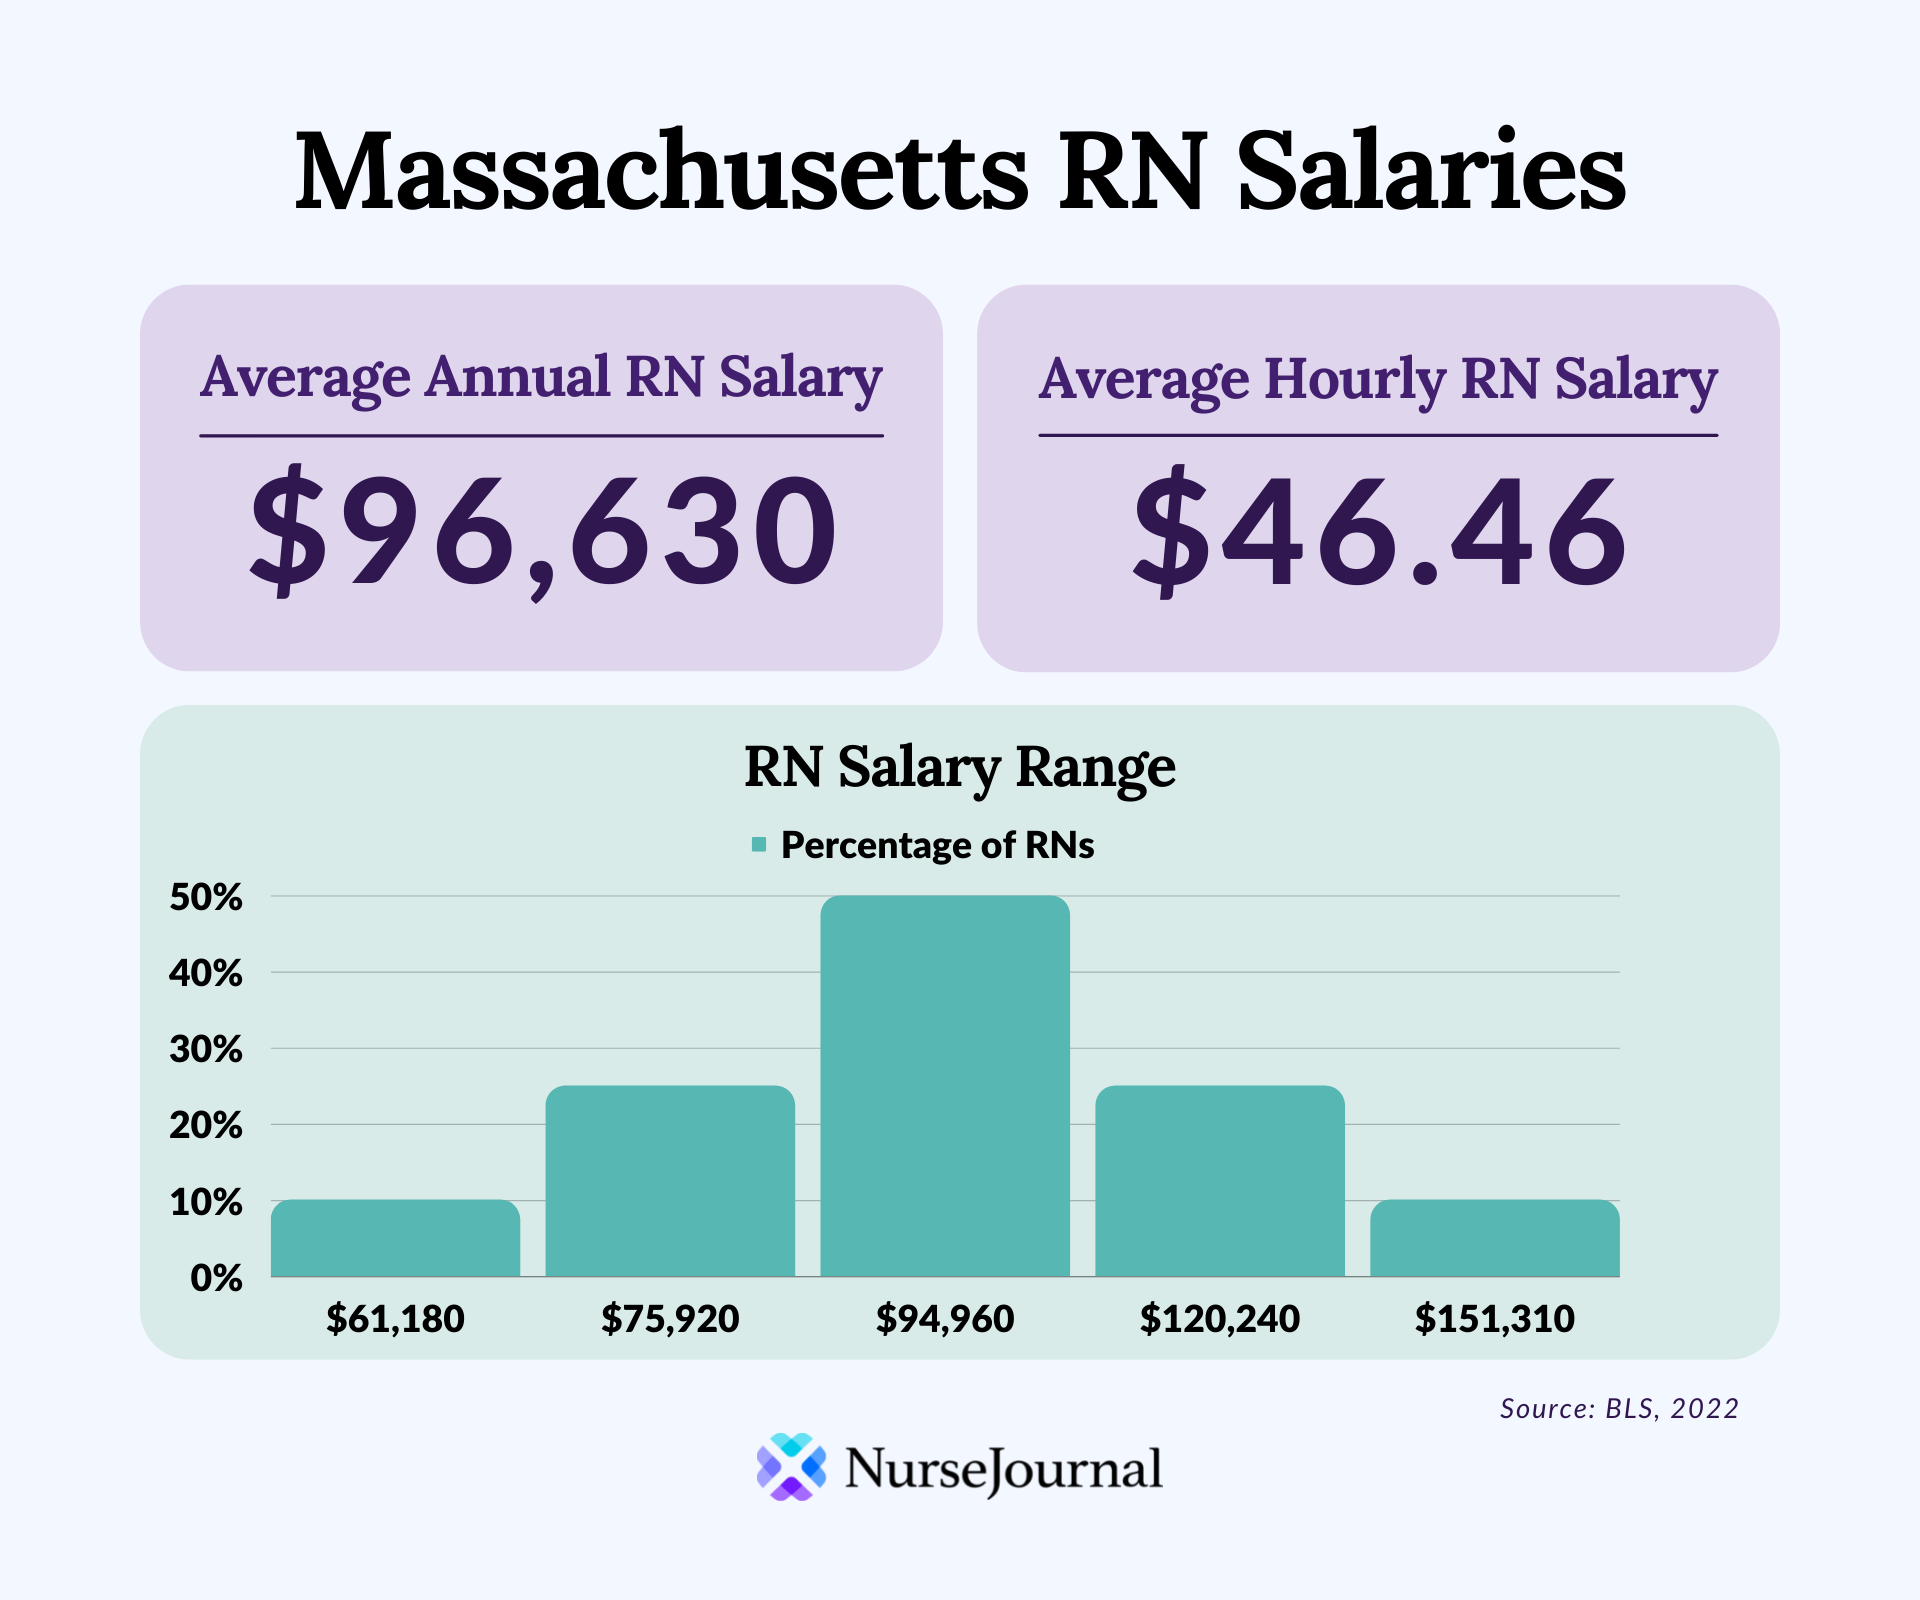 Infographic of registered nursing salary data in Massachusetts. The average annual RN salary is 96630. The average hourly RN salary is $46.46. Average RN salaries range from $61,180 among the bottom 10th percentile of earners to $151,310 among the top 90th percentile of earners.